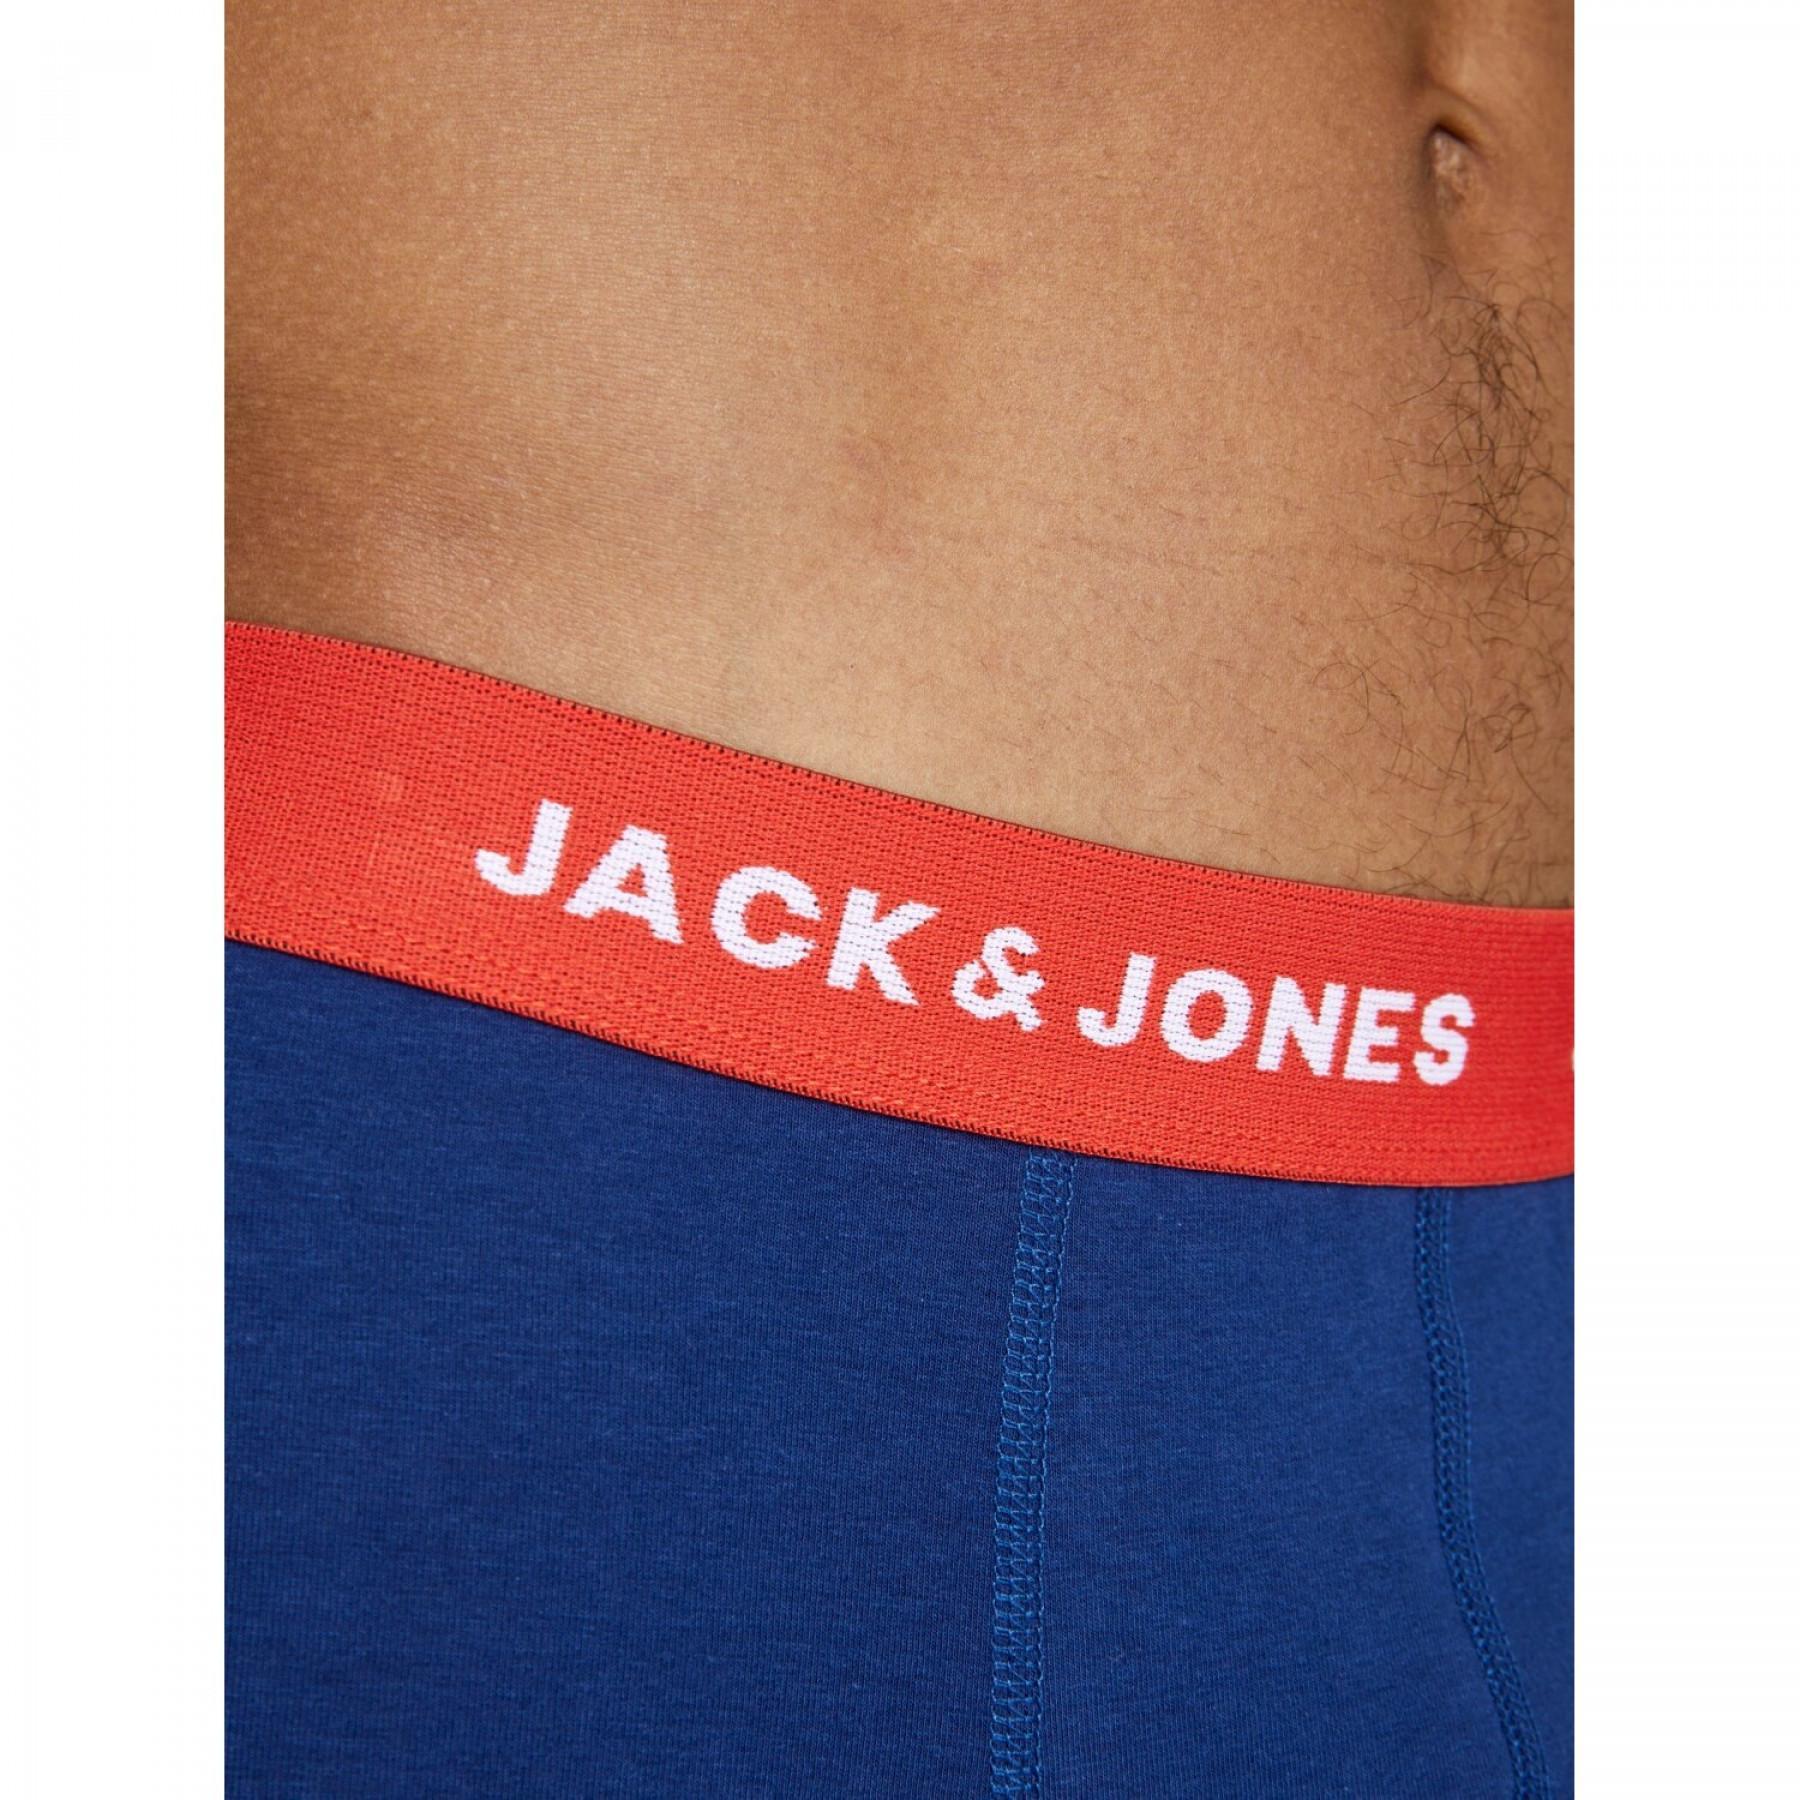 Conjunto de 5 calções de boxer Jack & Jones Jaclee 5